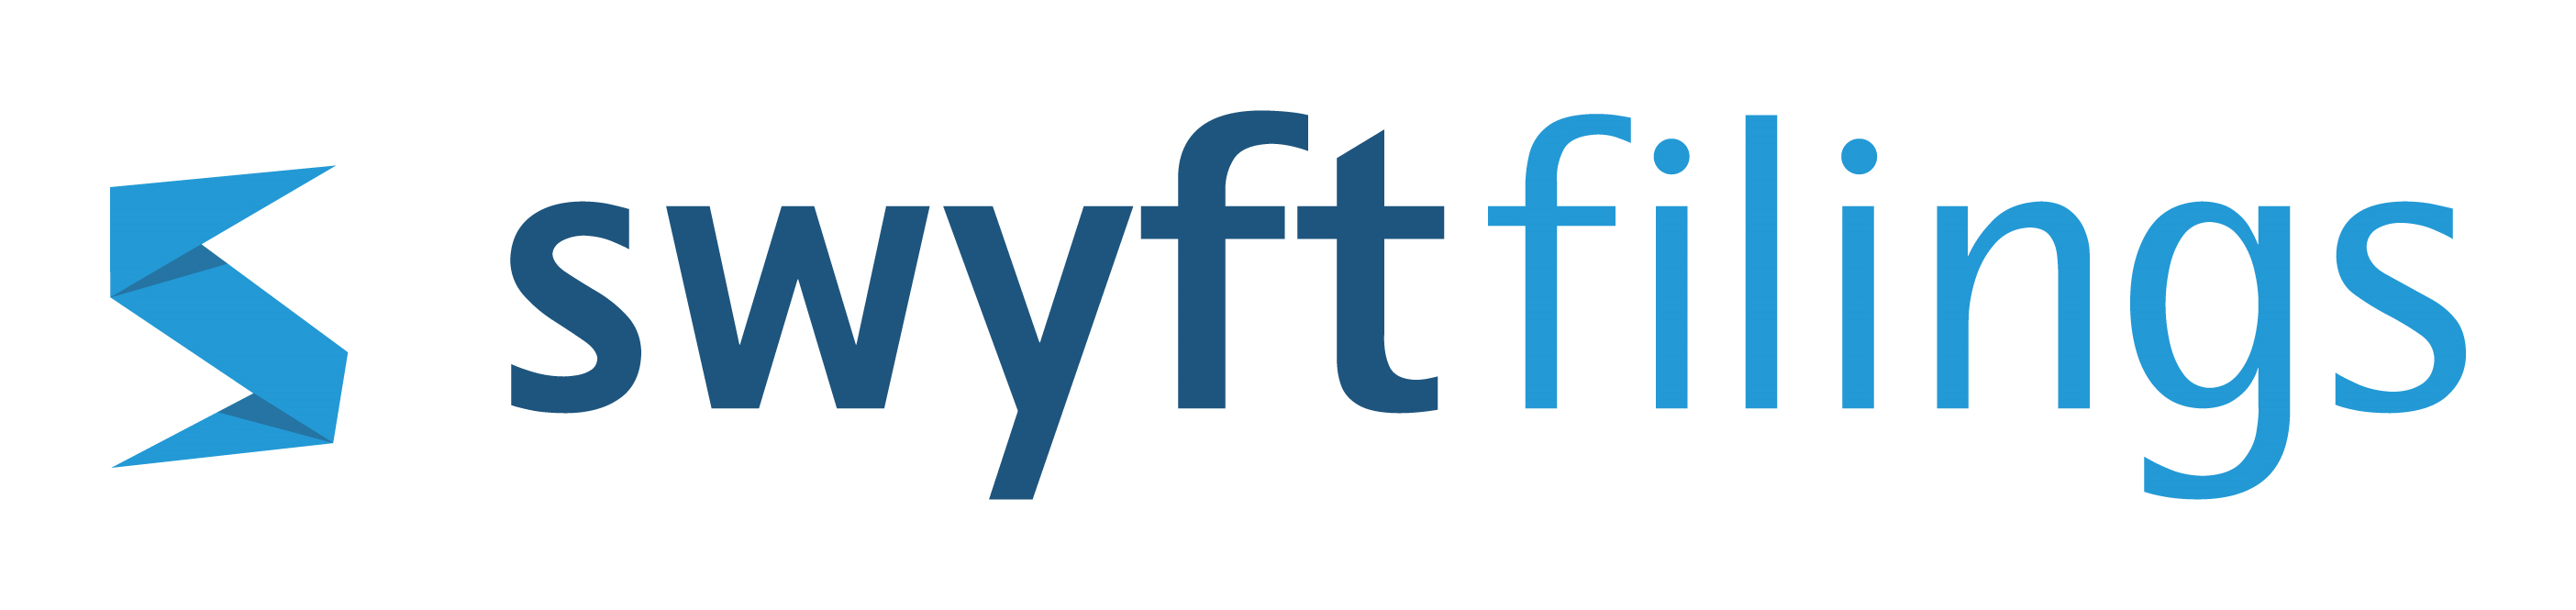 Swyft Filings Company Logo